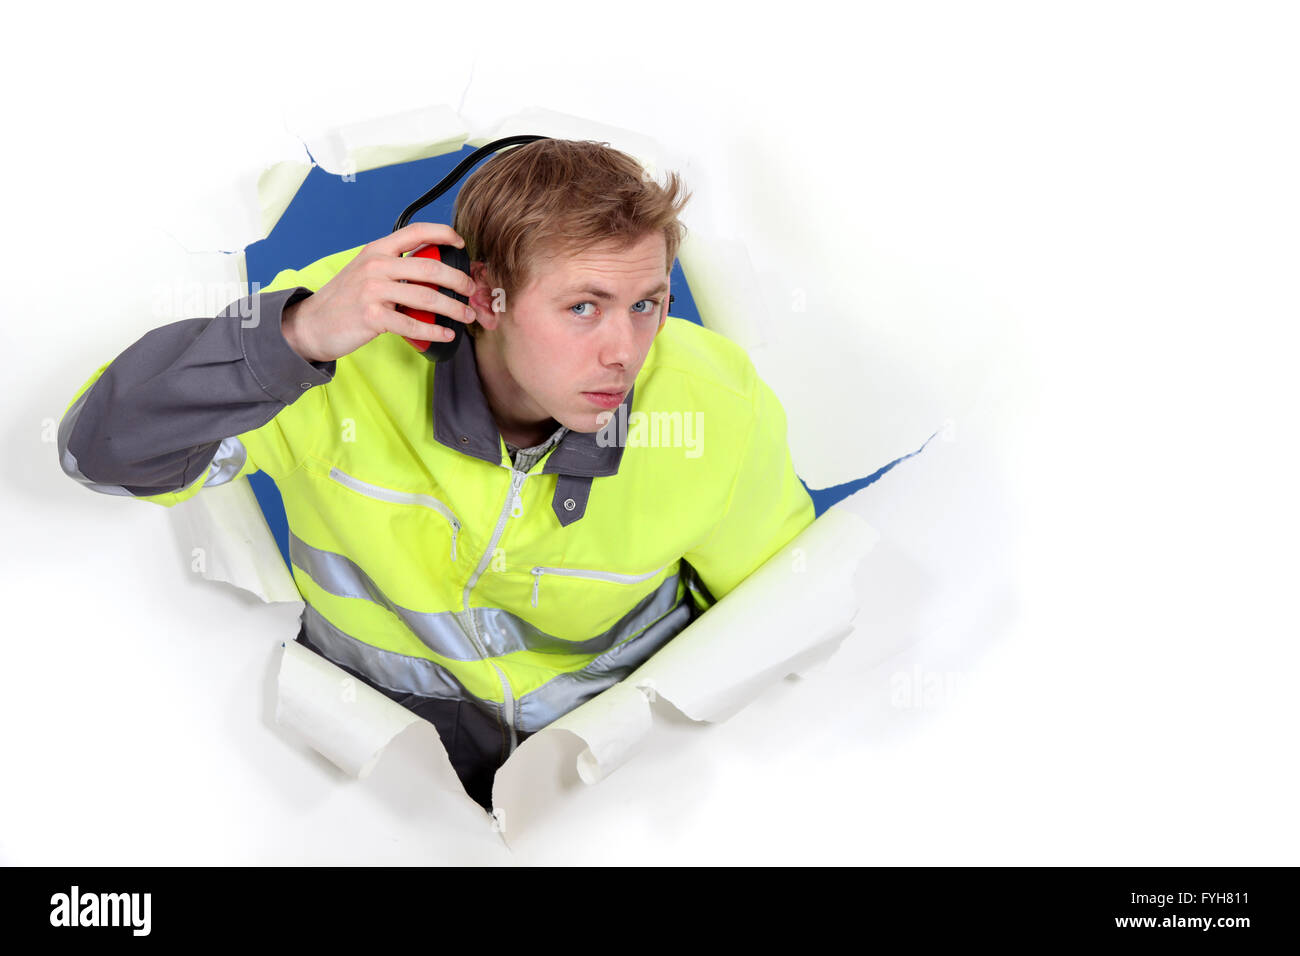 Man wearing reflective jacket and hearing protection Stock Photo